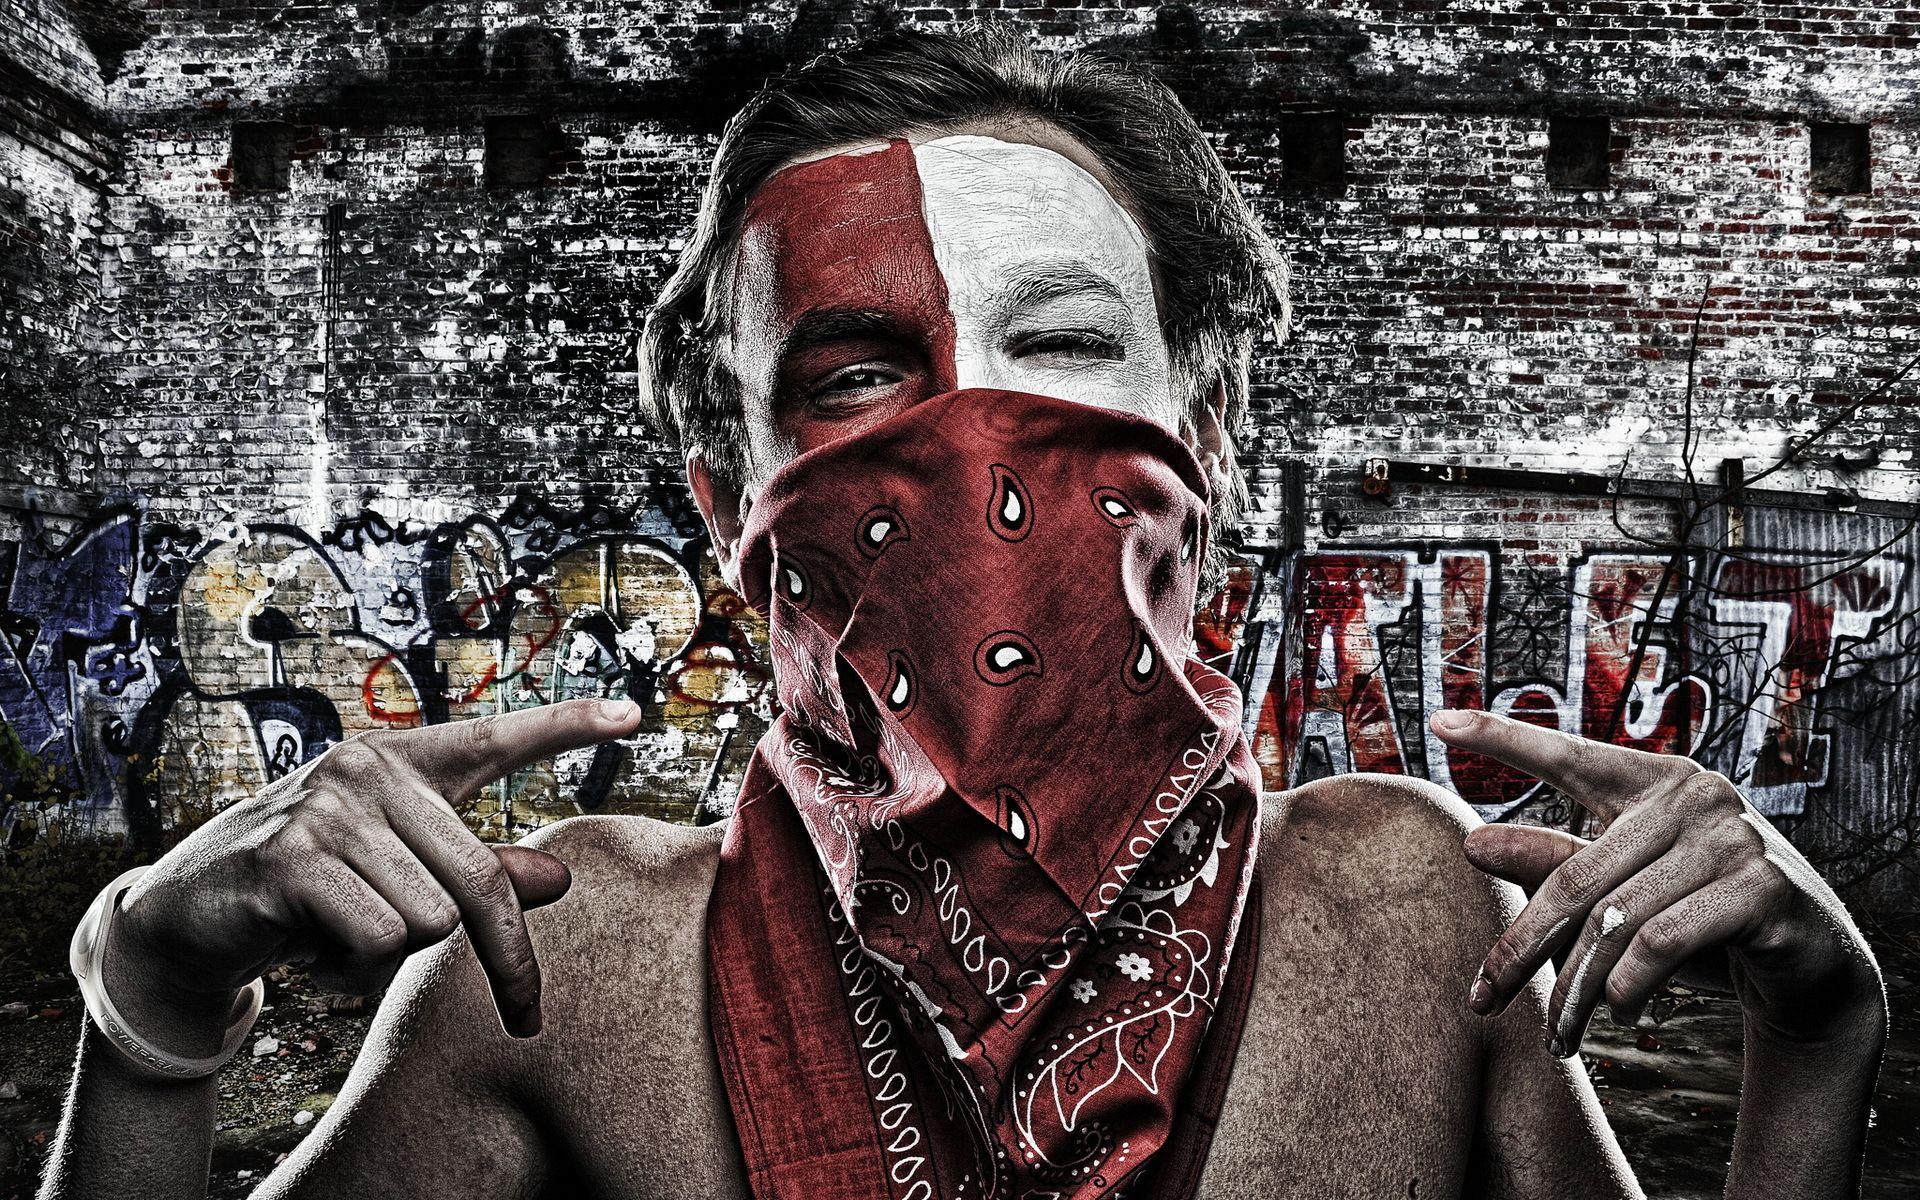 Men males urban mask bandana face eyes pov graffiti bricks people